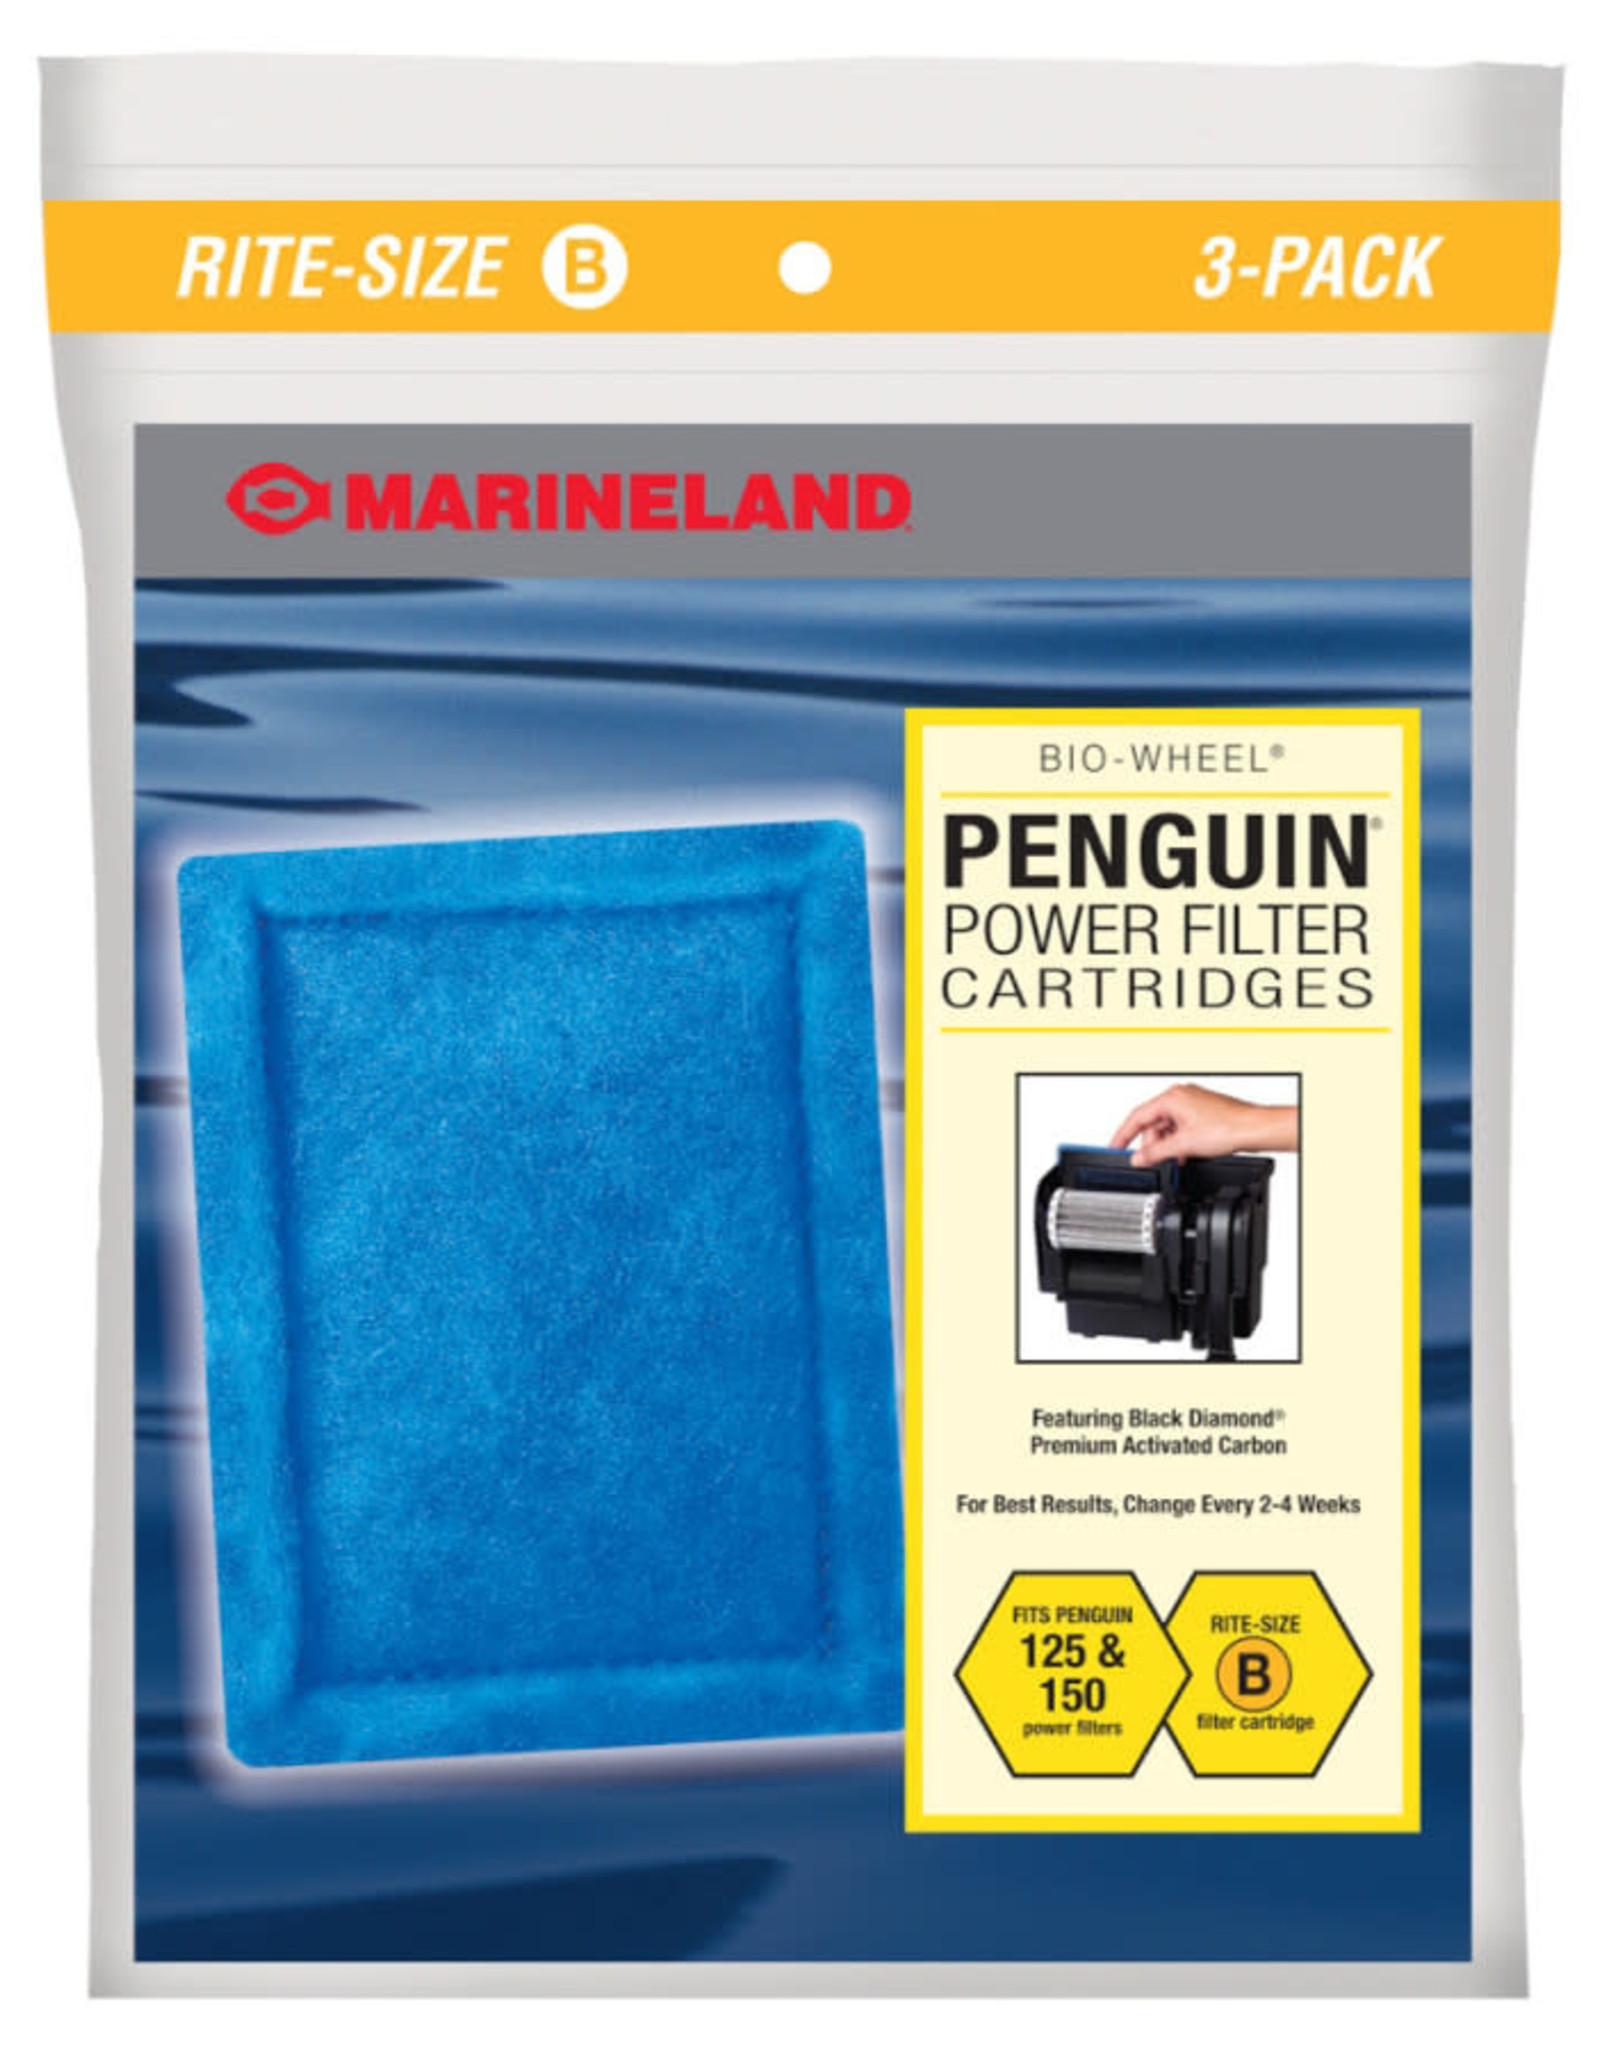 MARINELAND Marineland Penguin Power Filter Cartridge Rite-Size B